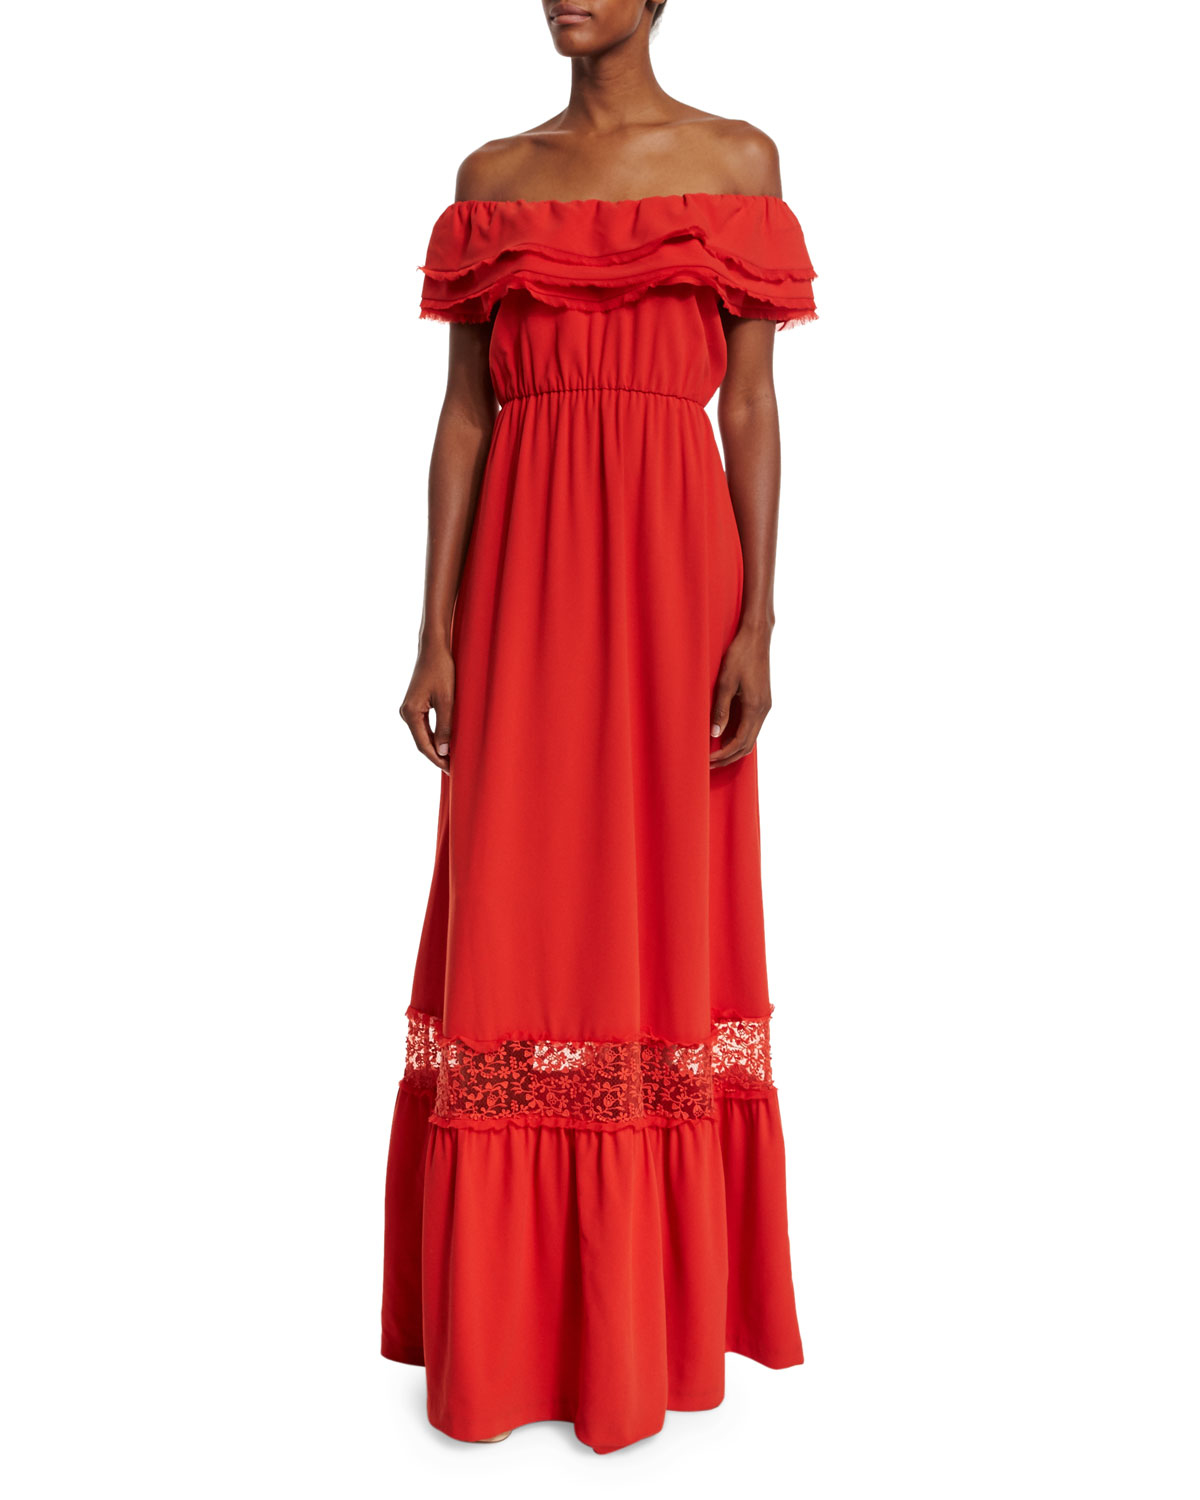 Alice + olivia Cheri Lace-trim Maxi Dress in Red | Lyst